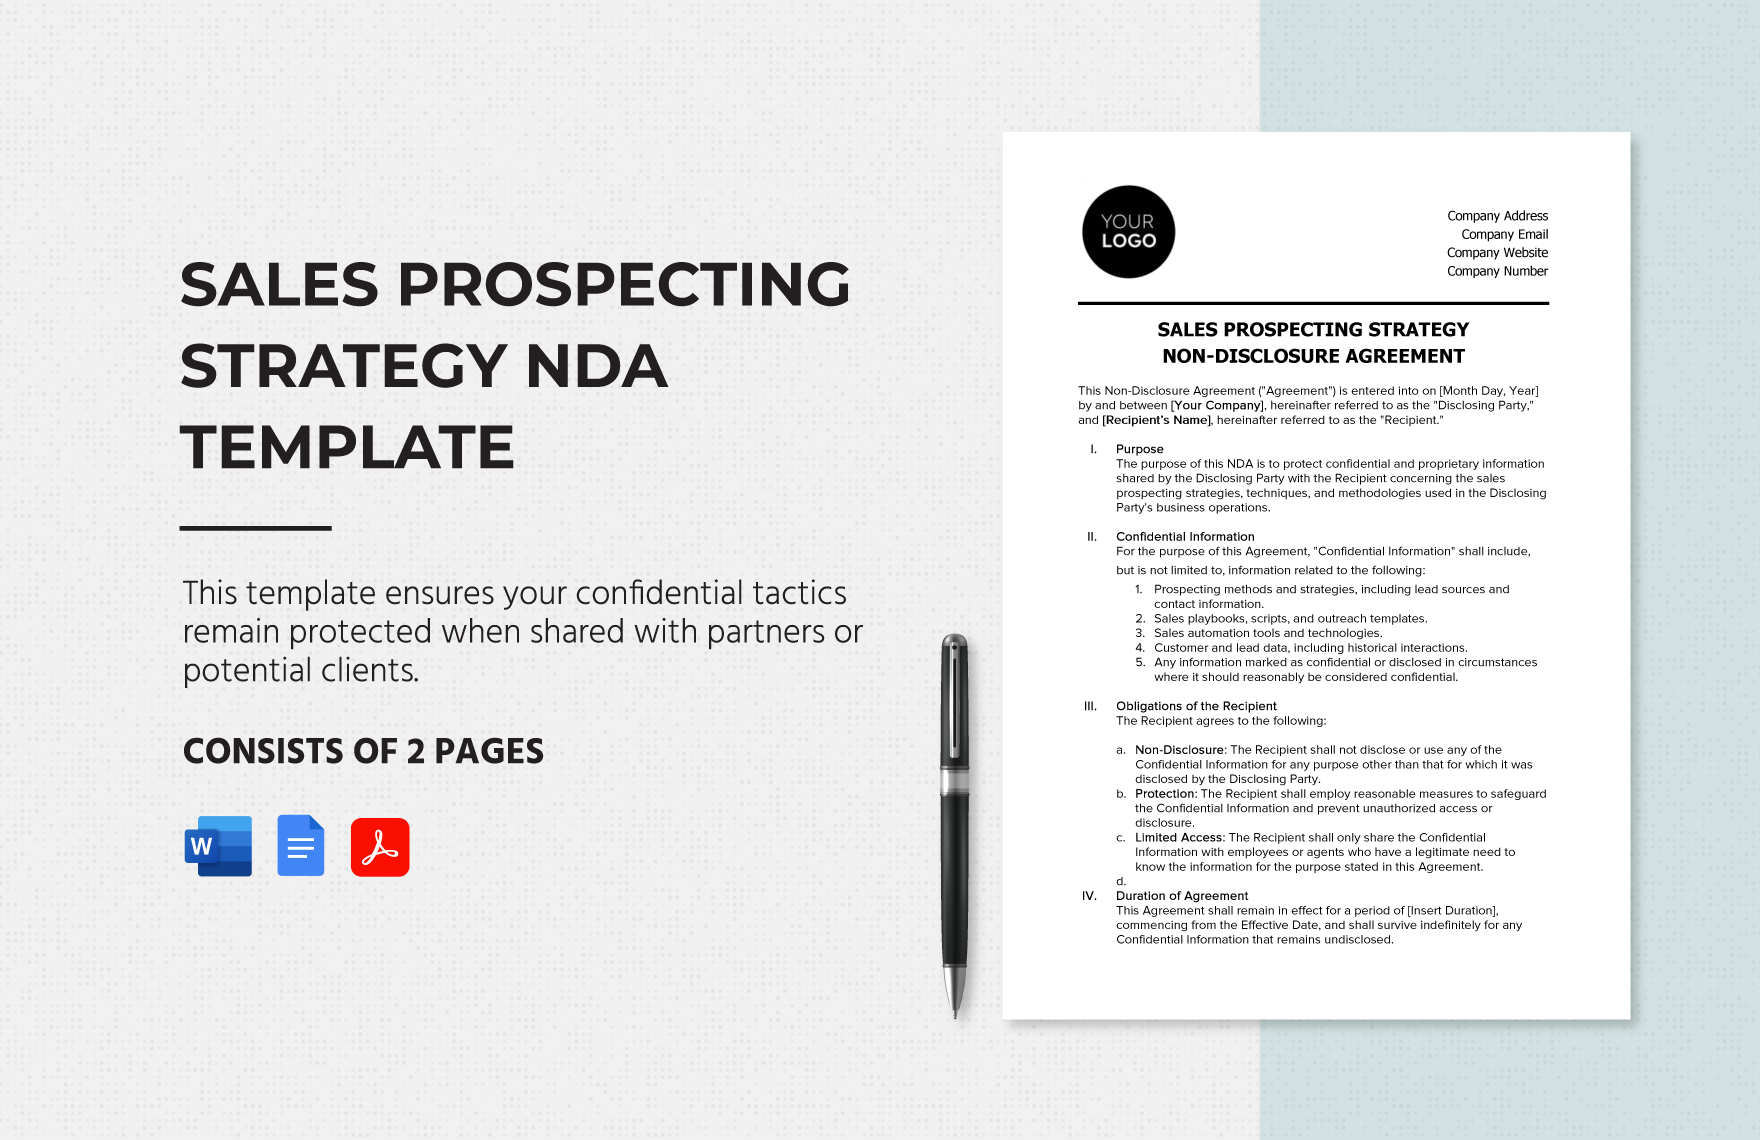 Sales Prospecting Strategy NDA Template